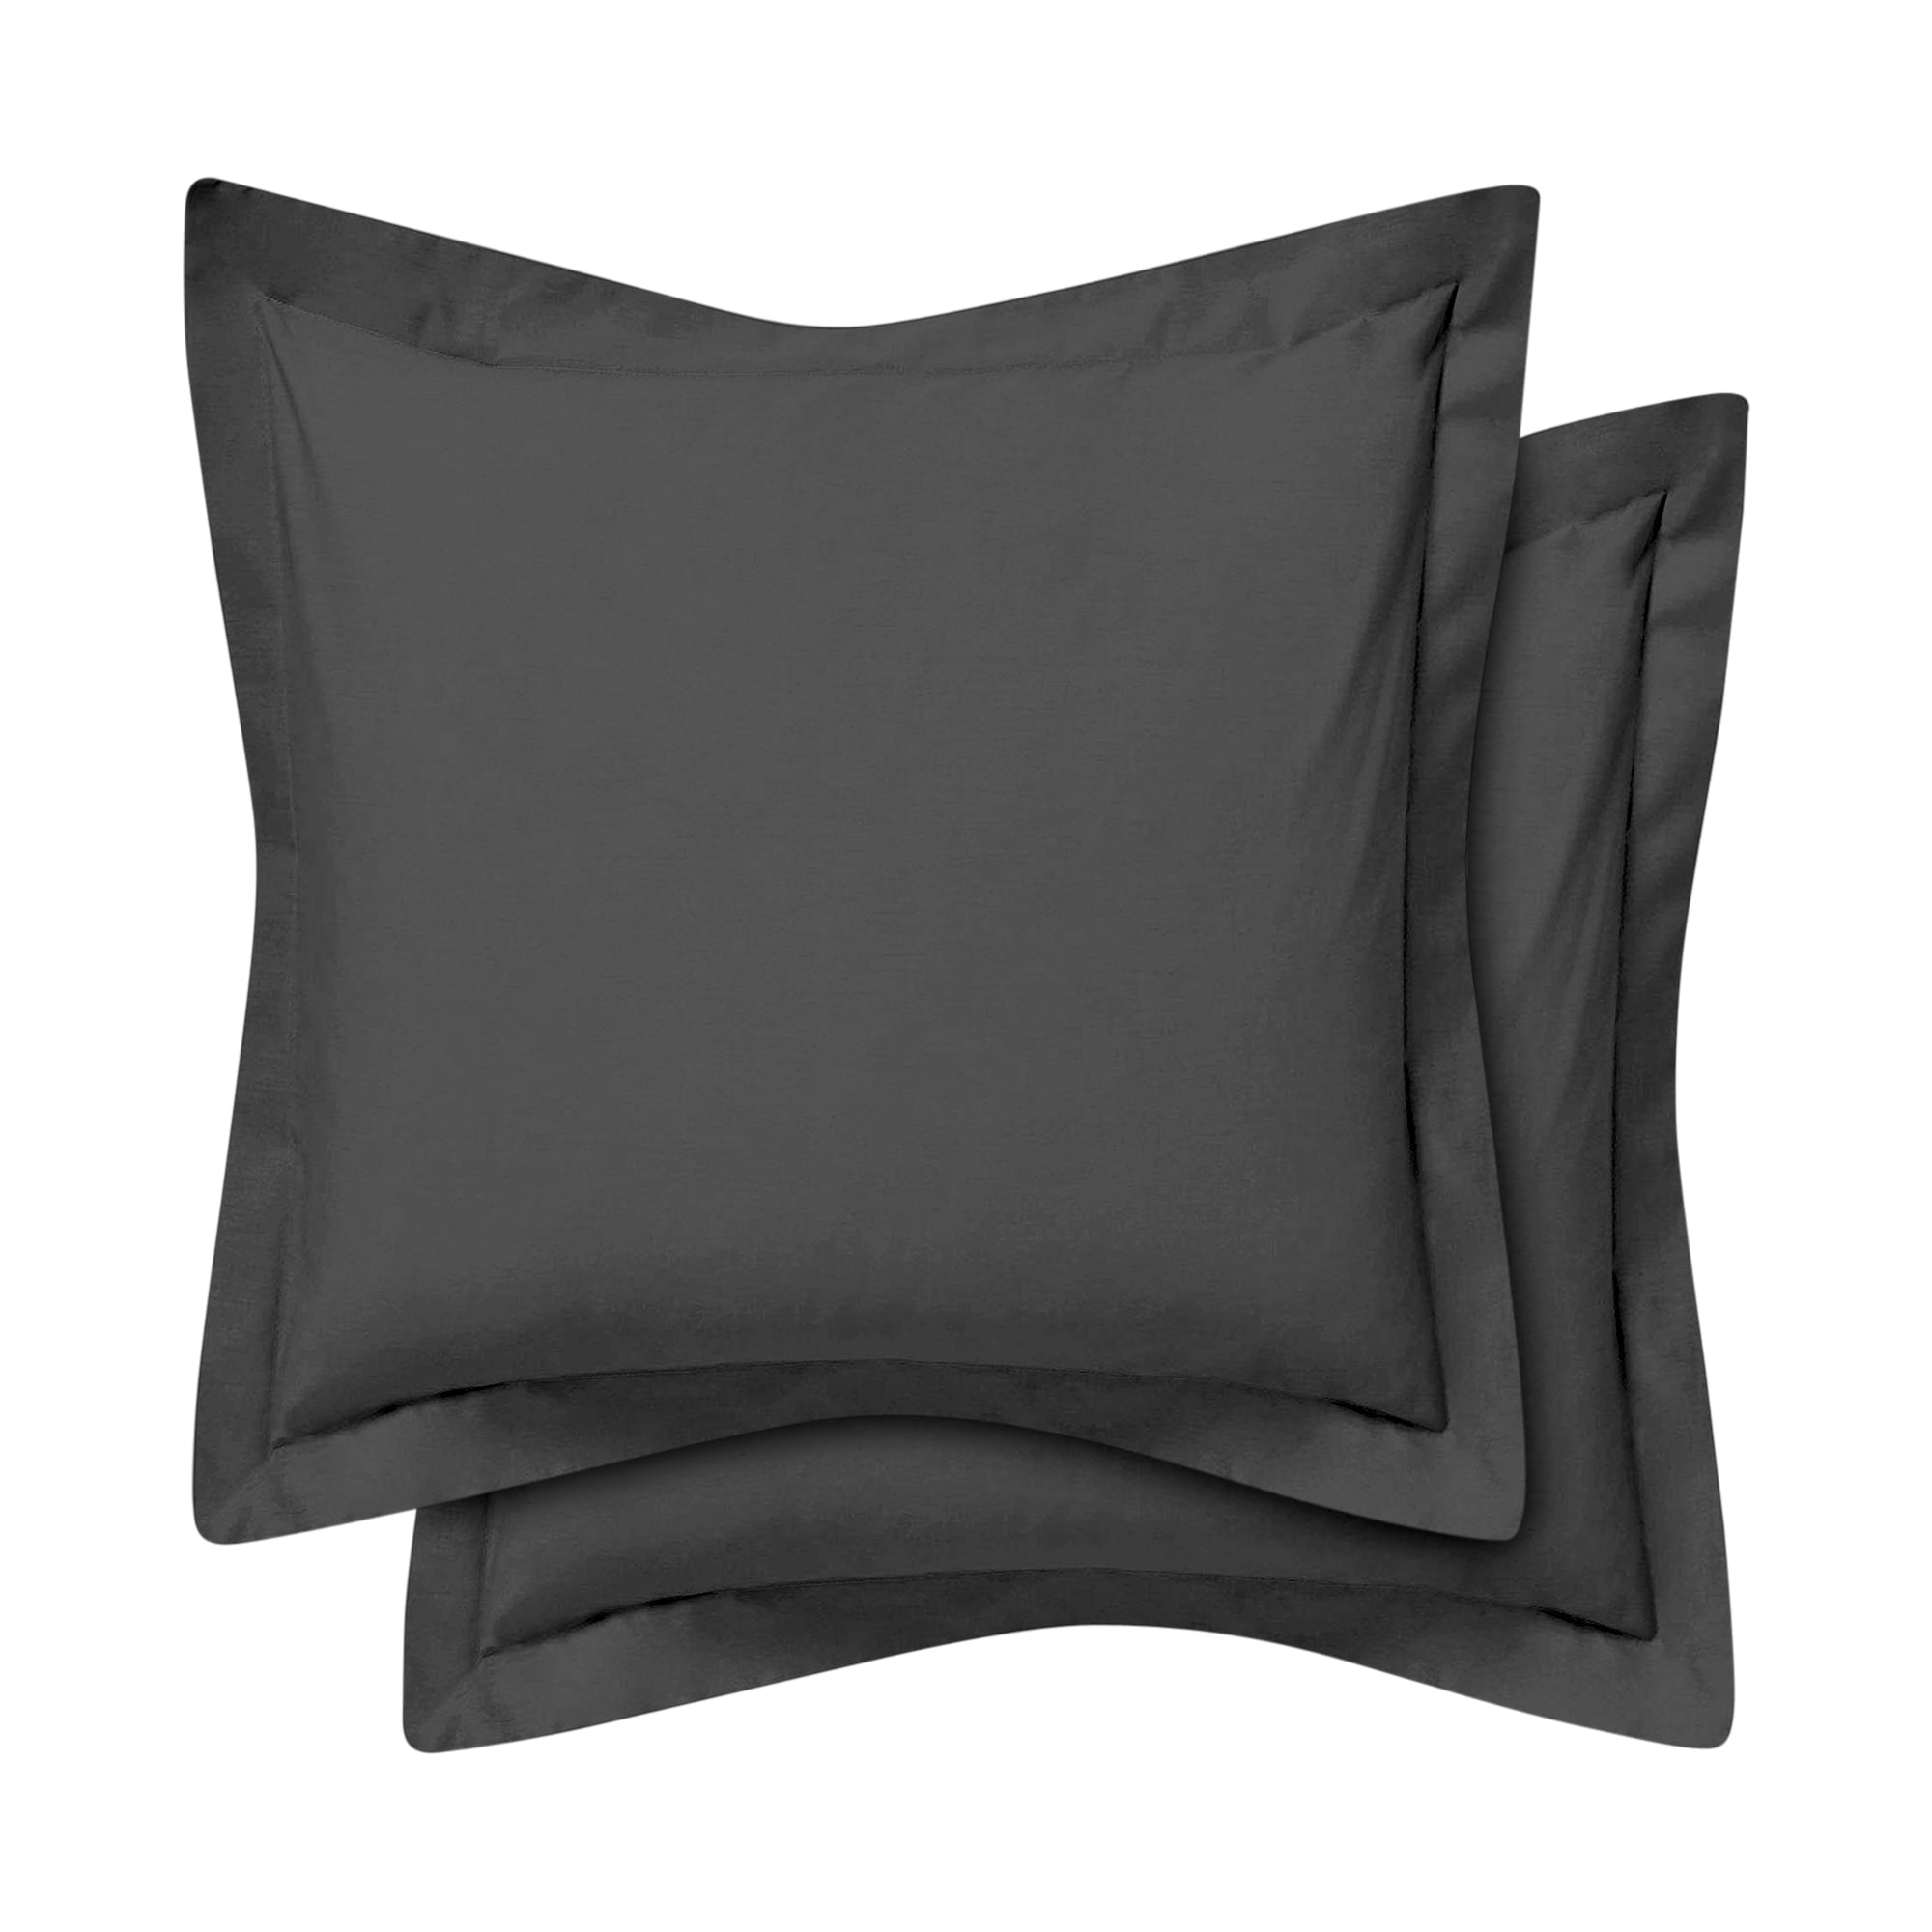 Cotton Metrics Heavy Quality European Square Pillow Shams Set of 2